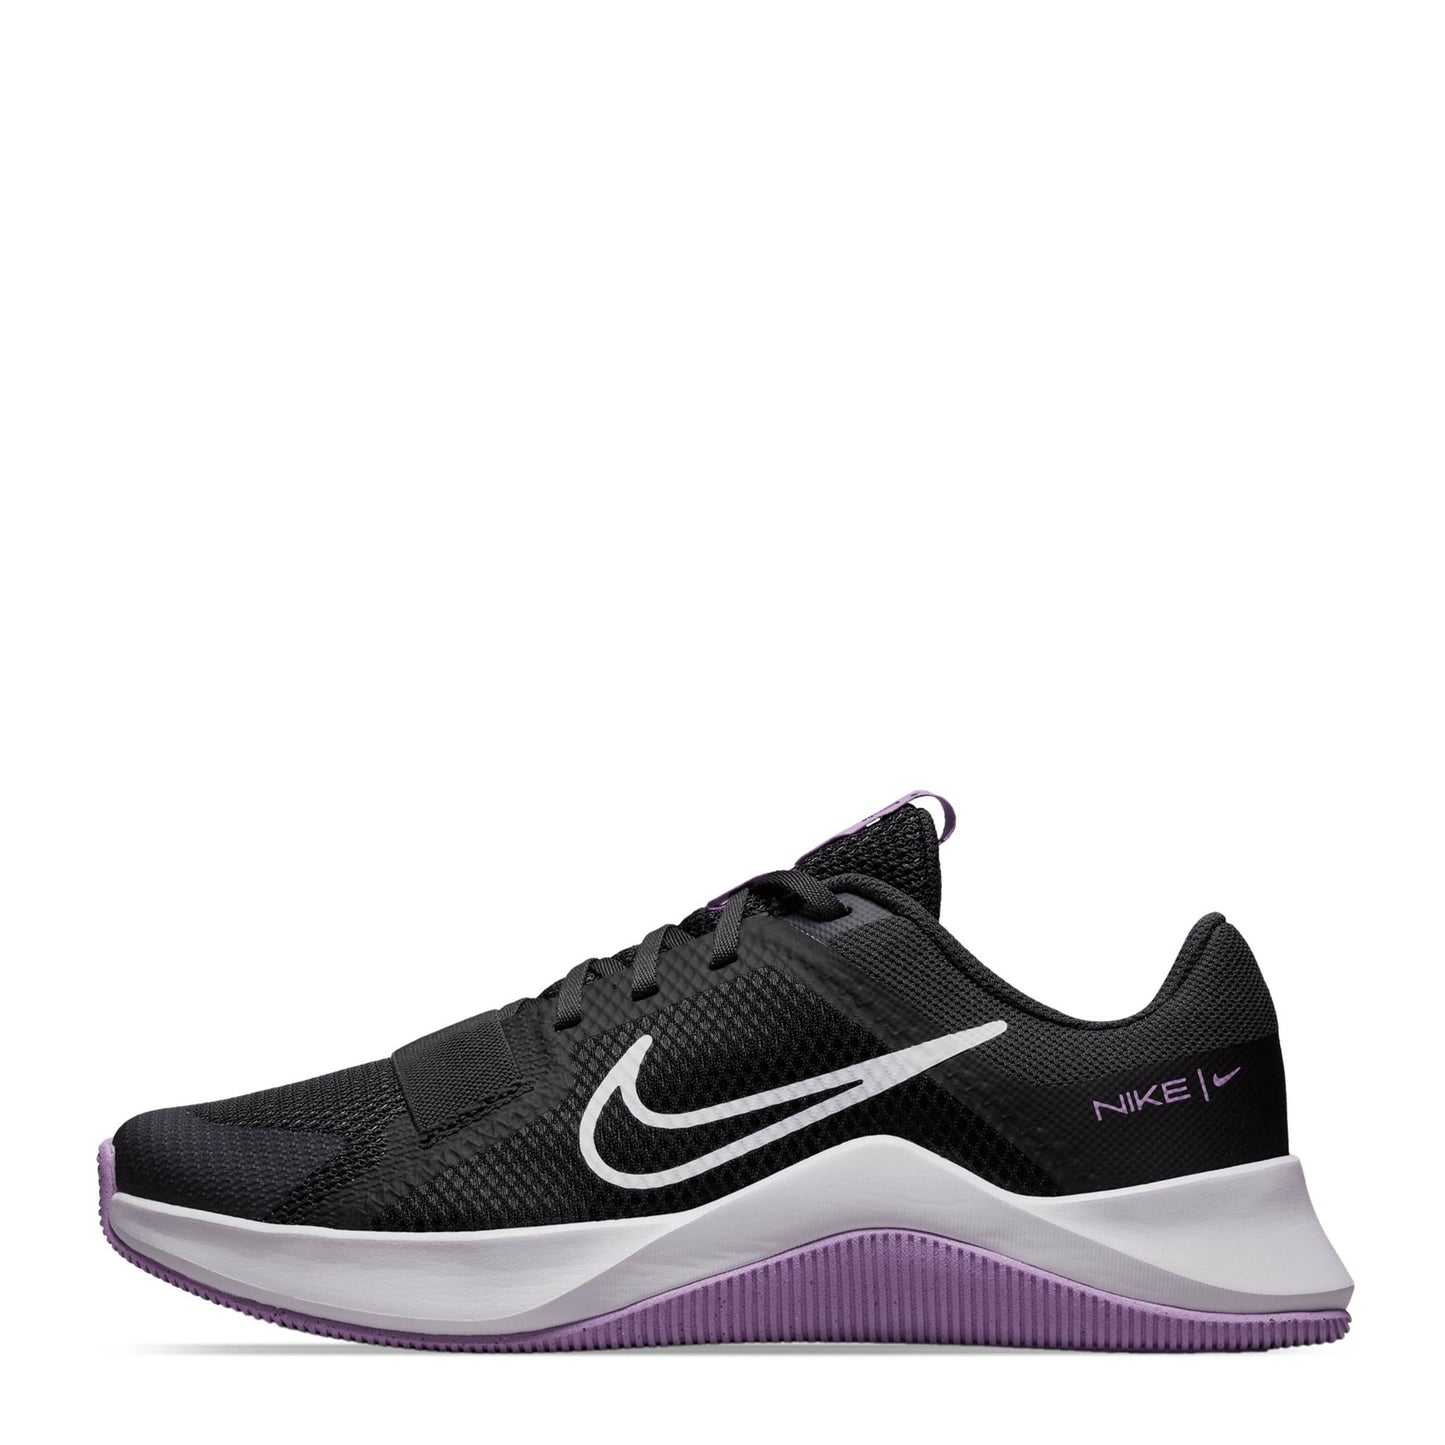 Tenis Nike MC Trainer 2